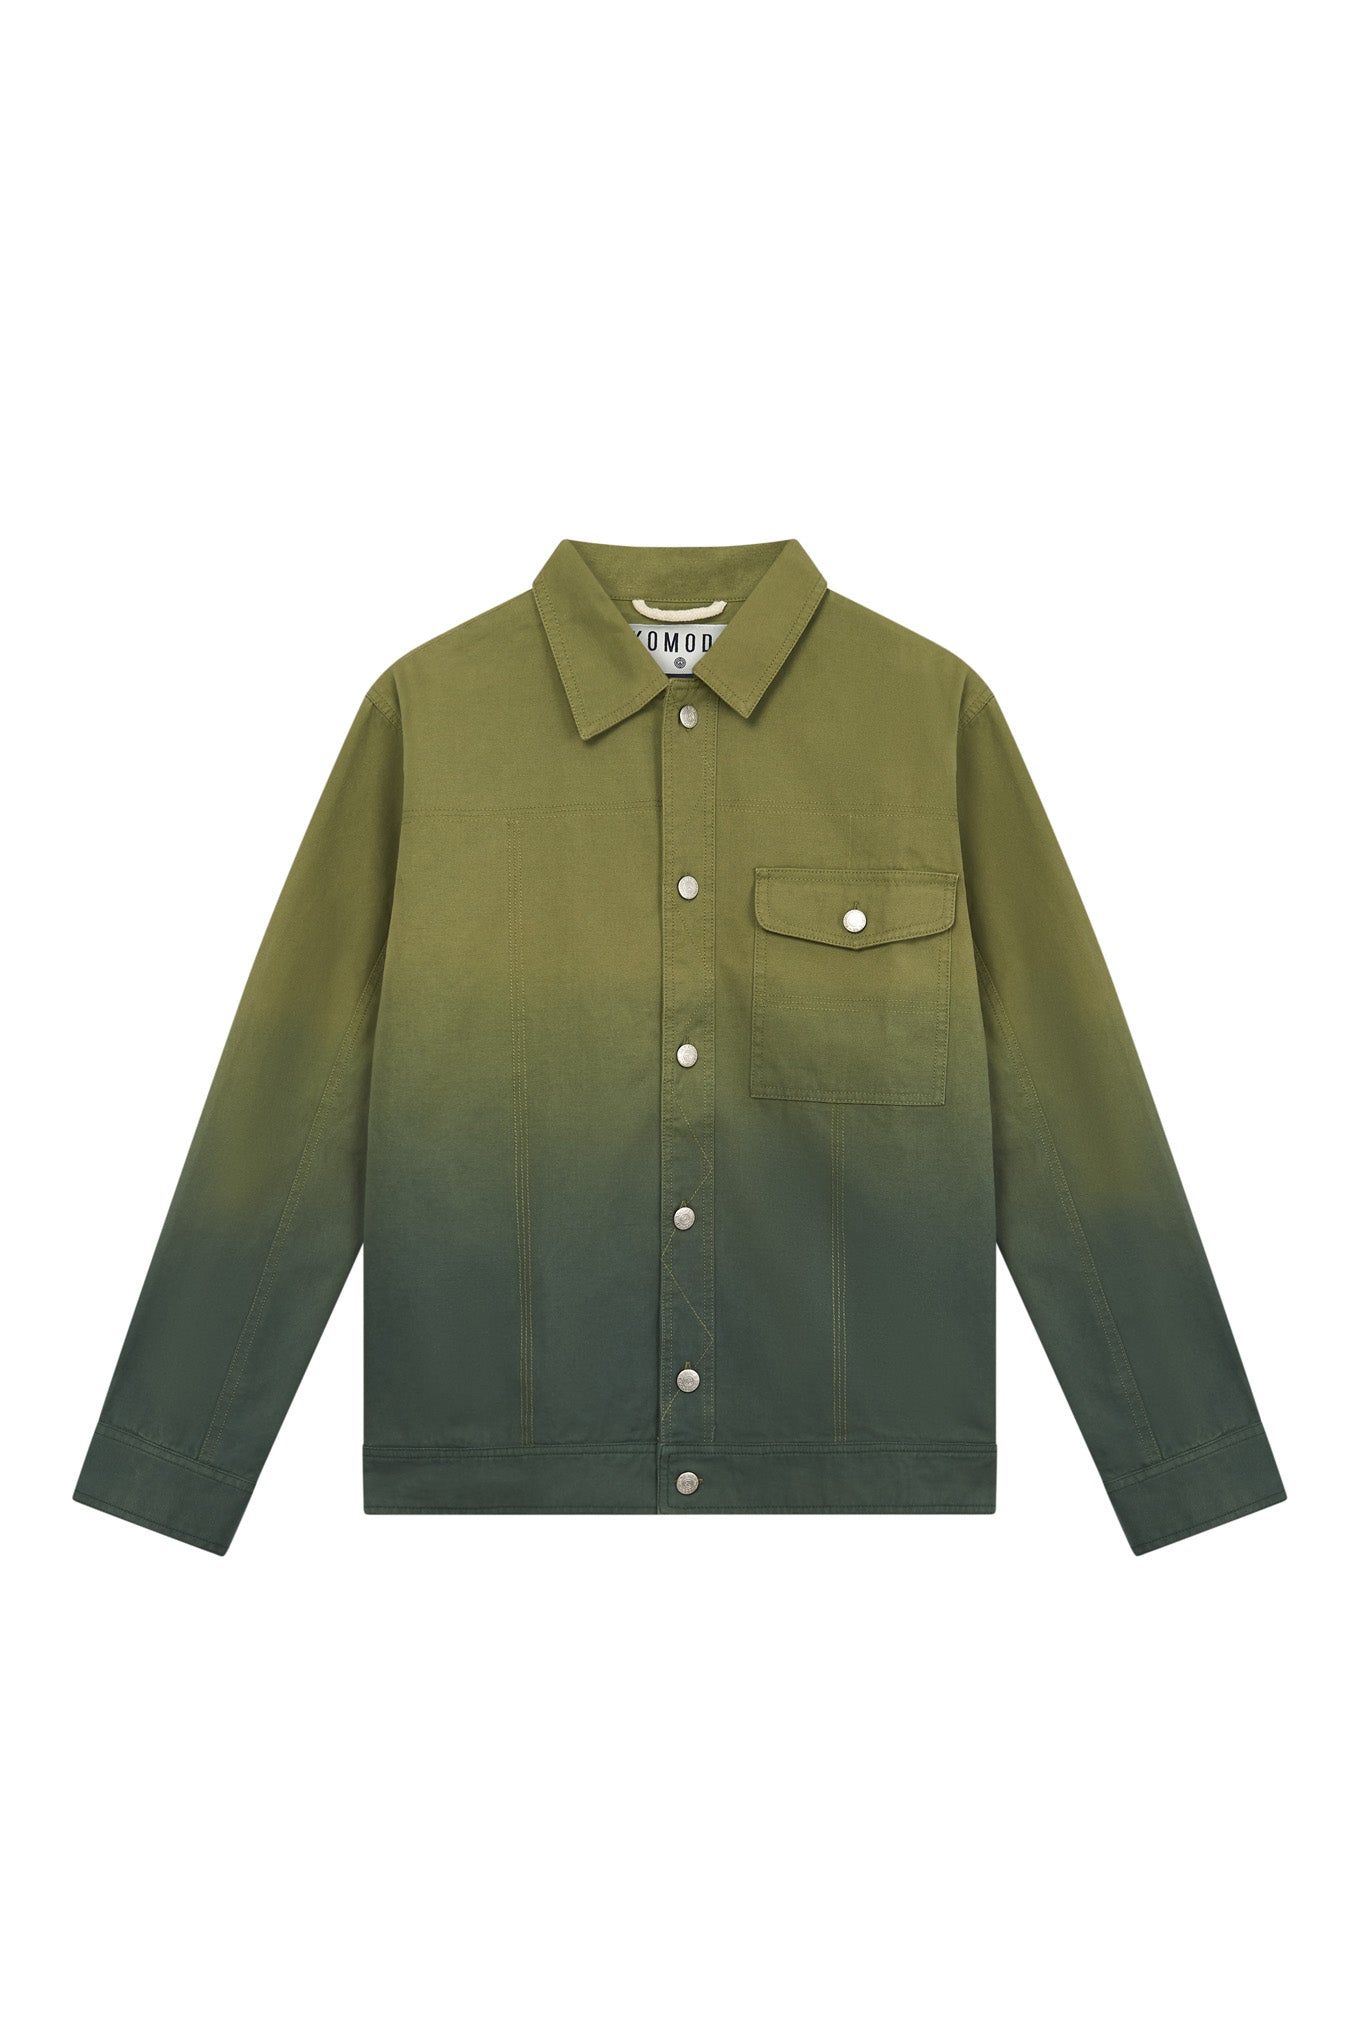 Khaki green jacket Orino made from 100% organic cotton by Komodo